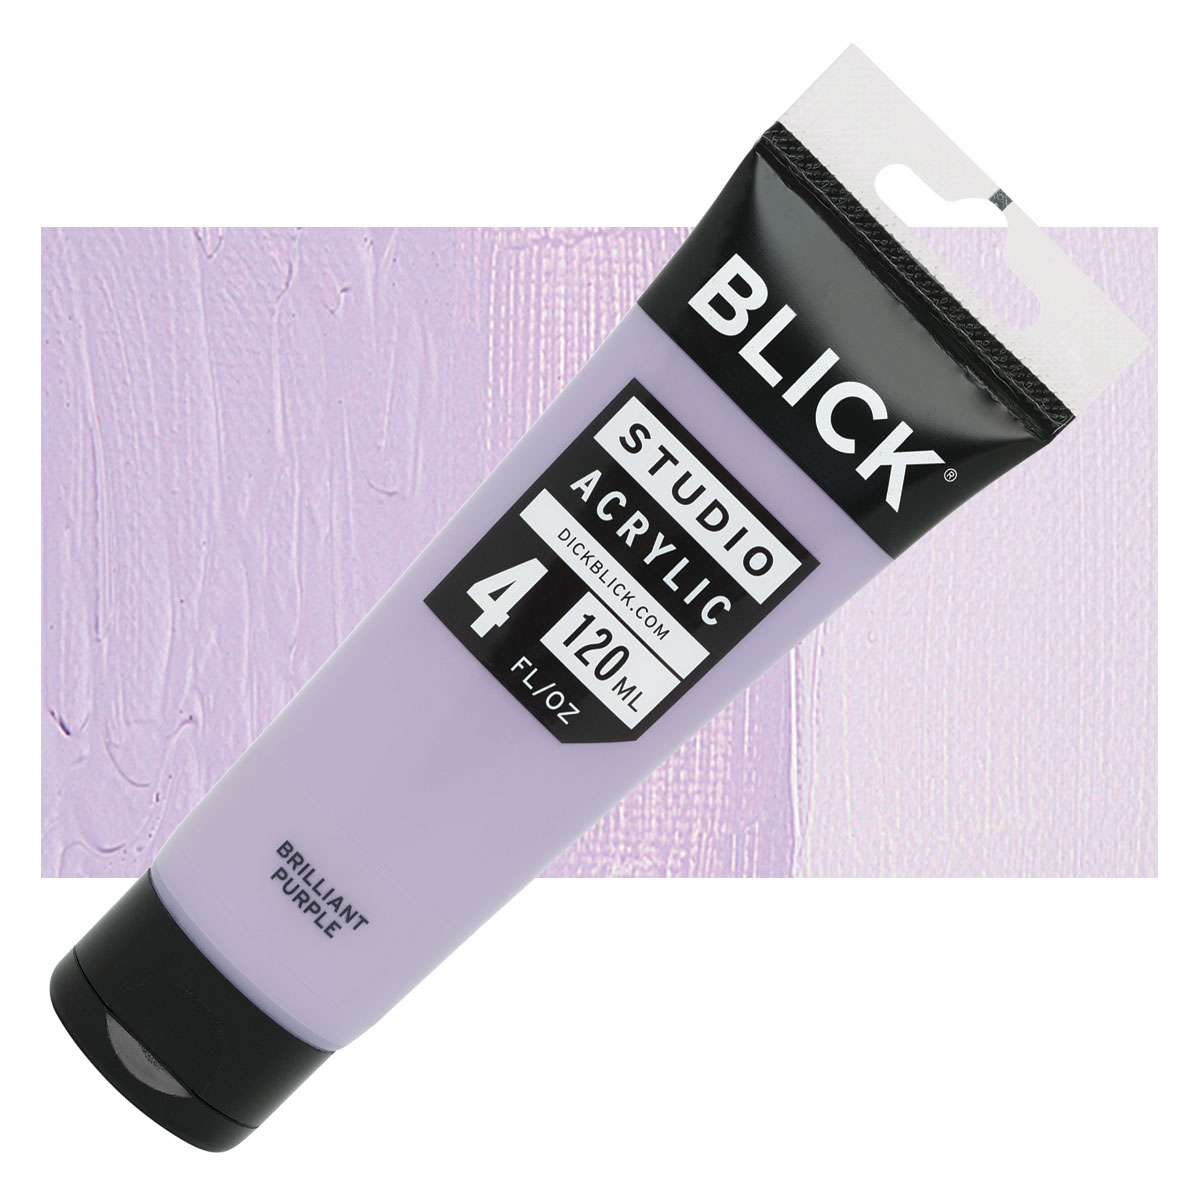 Blick Studio Acrylic Paints and Sets